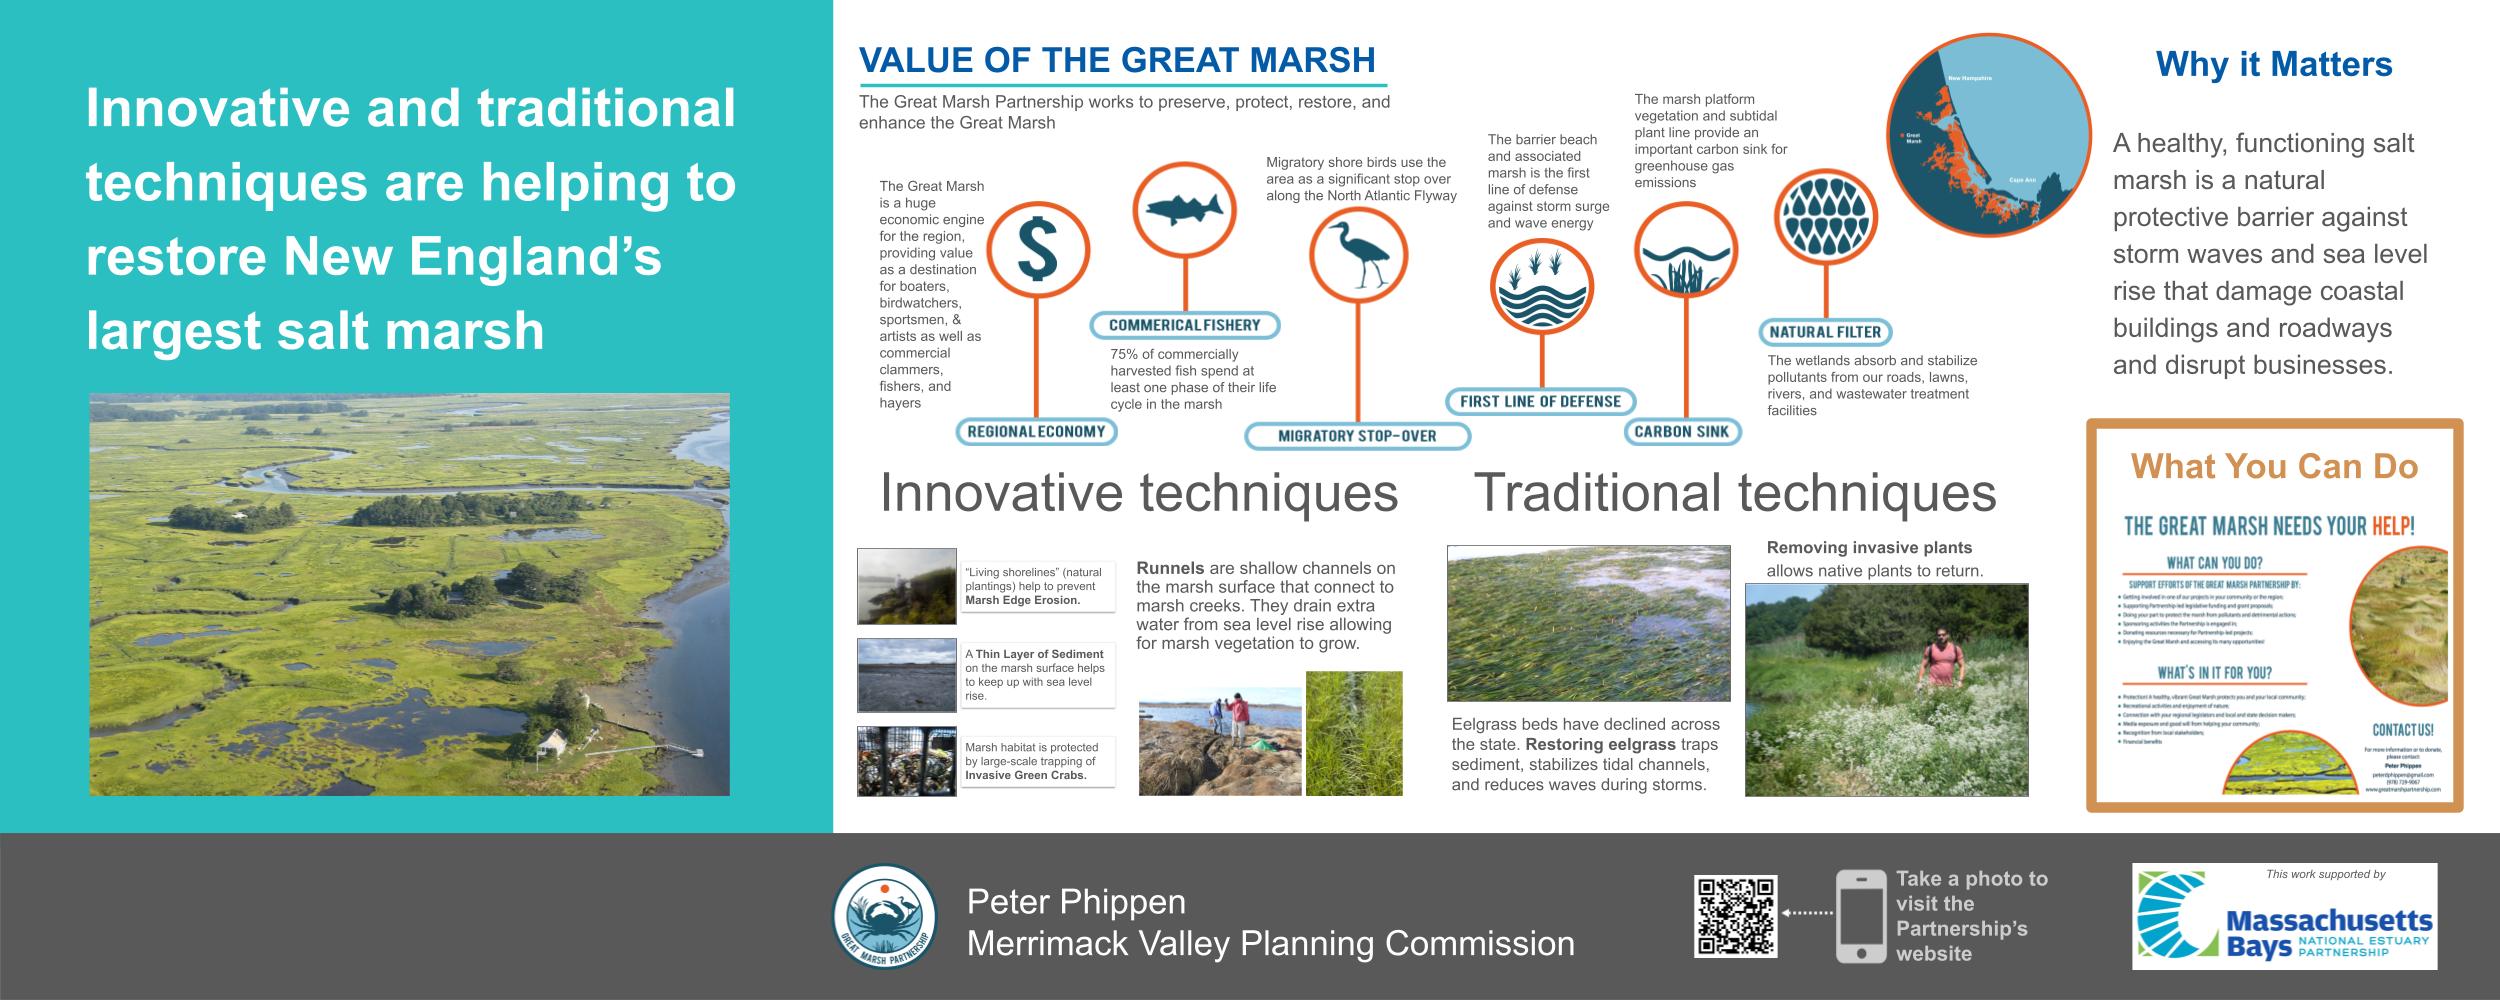 Poster describes traditional and new methods of salt marsh restoration.